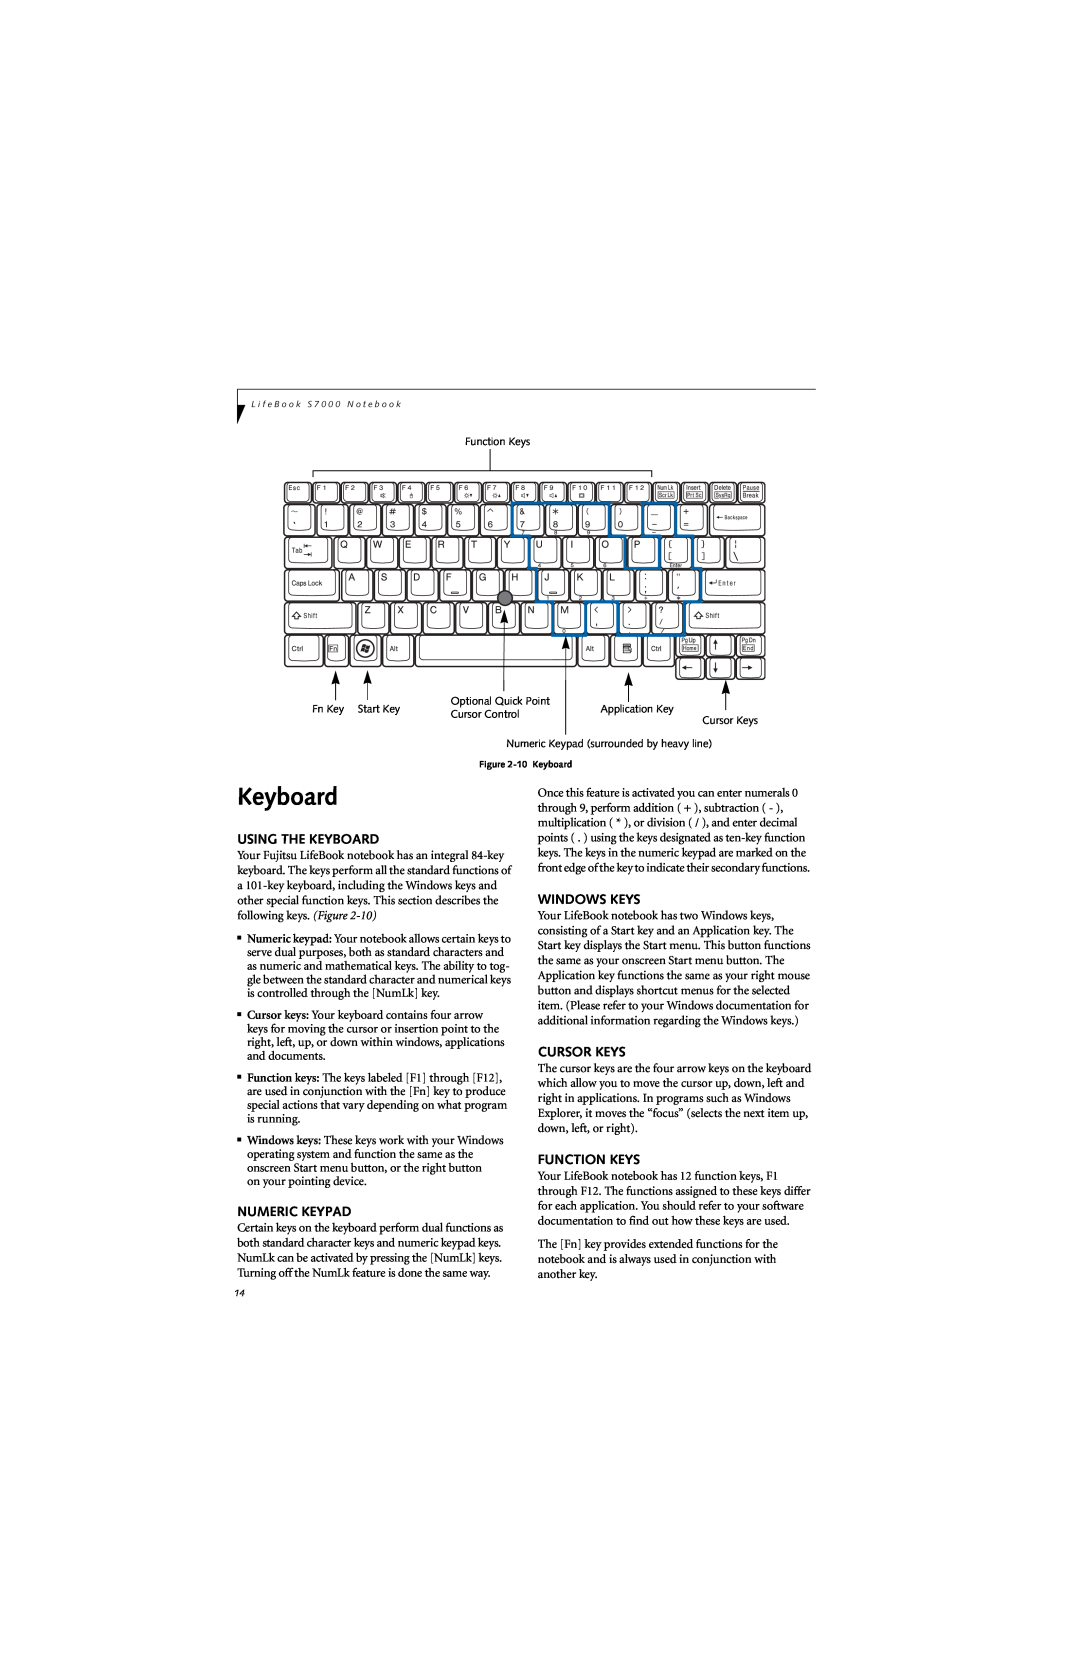 Fujitsu S7210 manual Using The Keyboard, Numeric Keypad, Windows Keys, Cursor Keys, Function Keys 